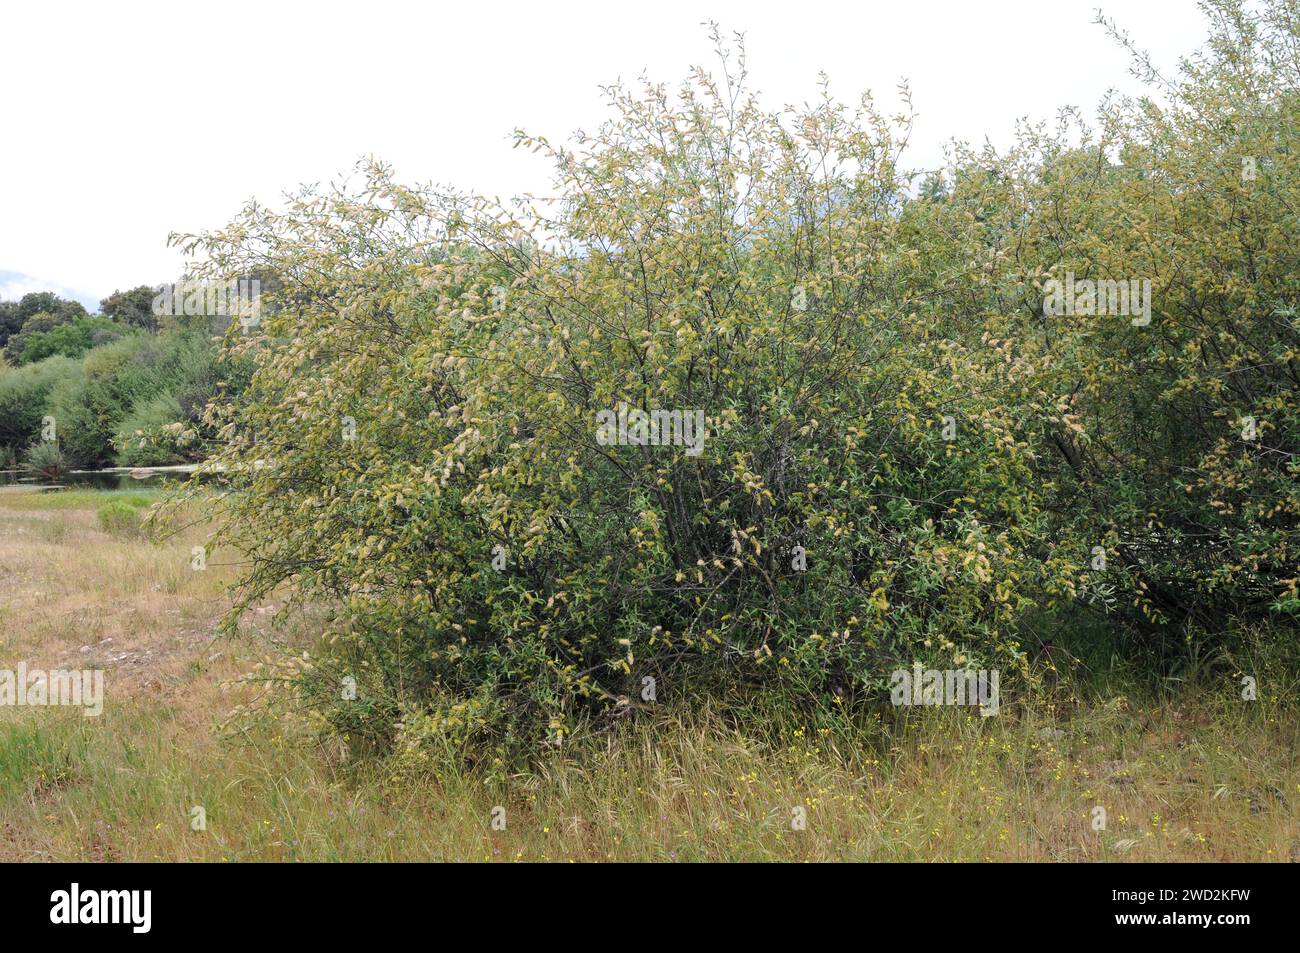 Barda (Salix salviifolia) is a deciduous shrub endemic to Iberian Peninsula. This photo was taken in Toledo province, Castilla-La Mancha, Spain. Stock Photo